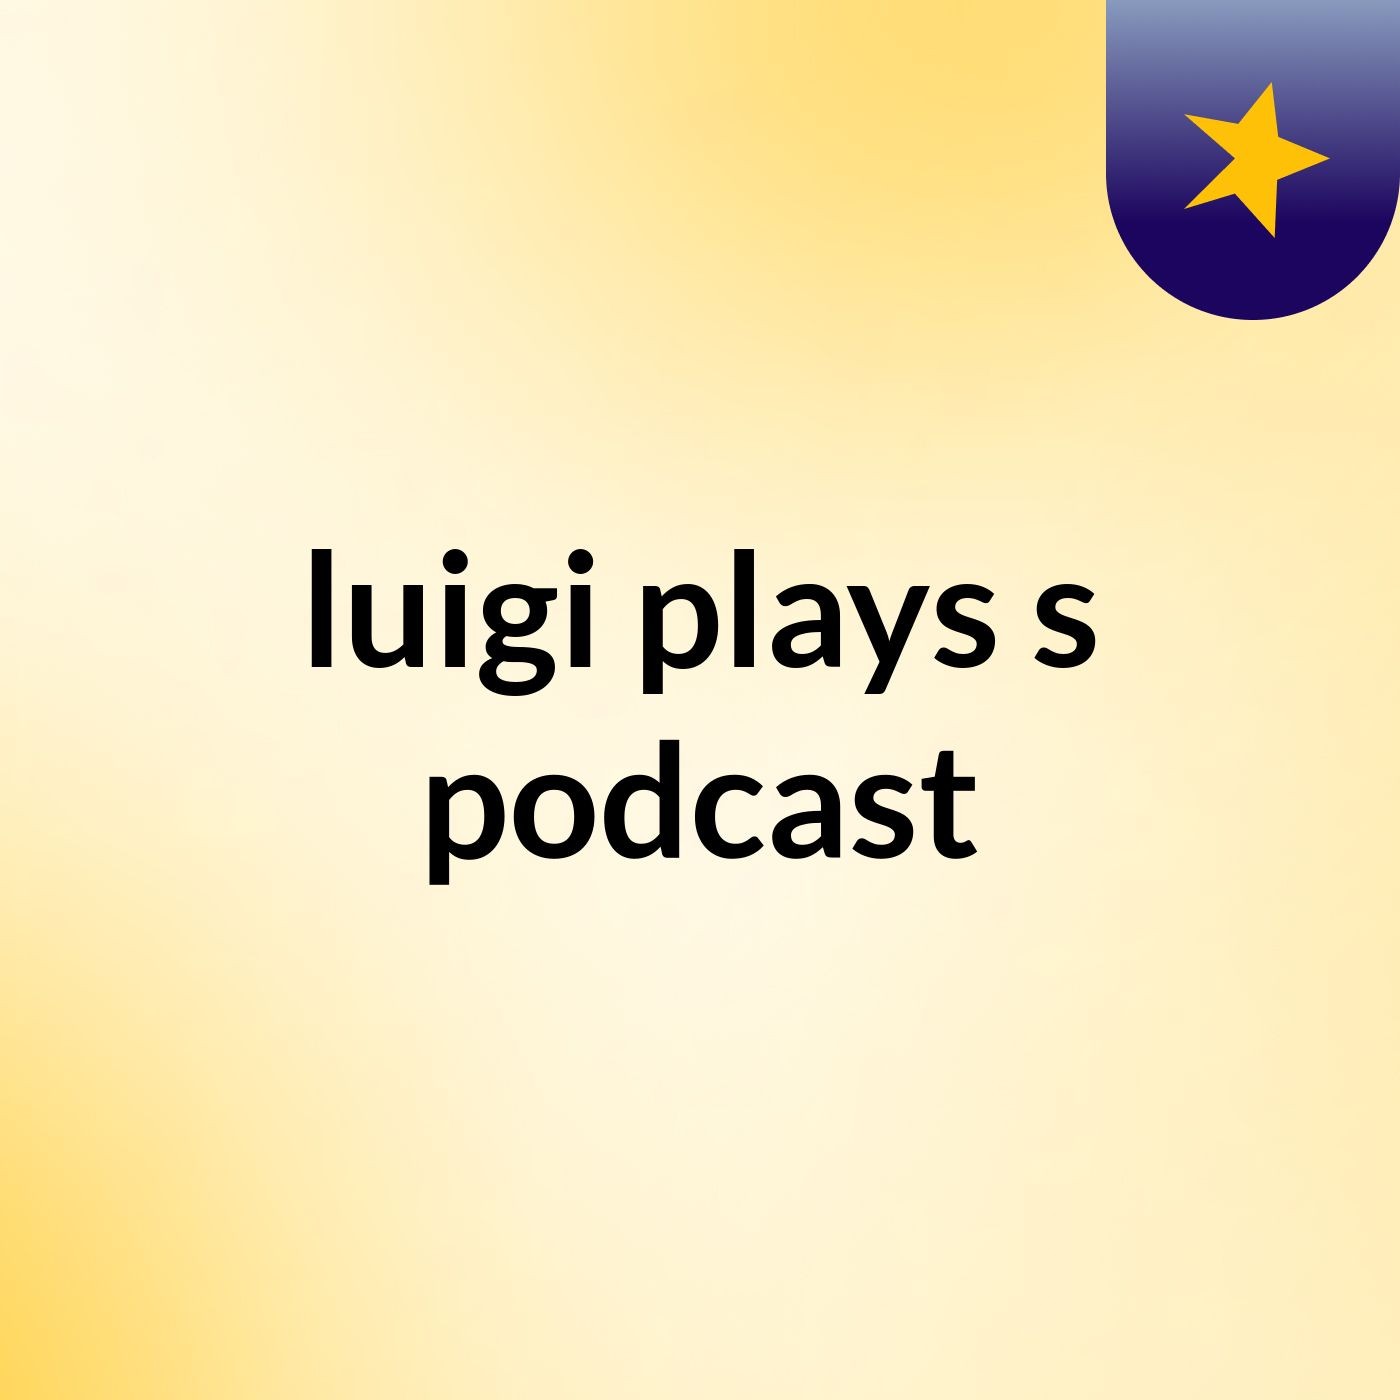 luigi plays's podcast